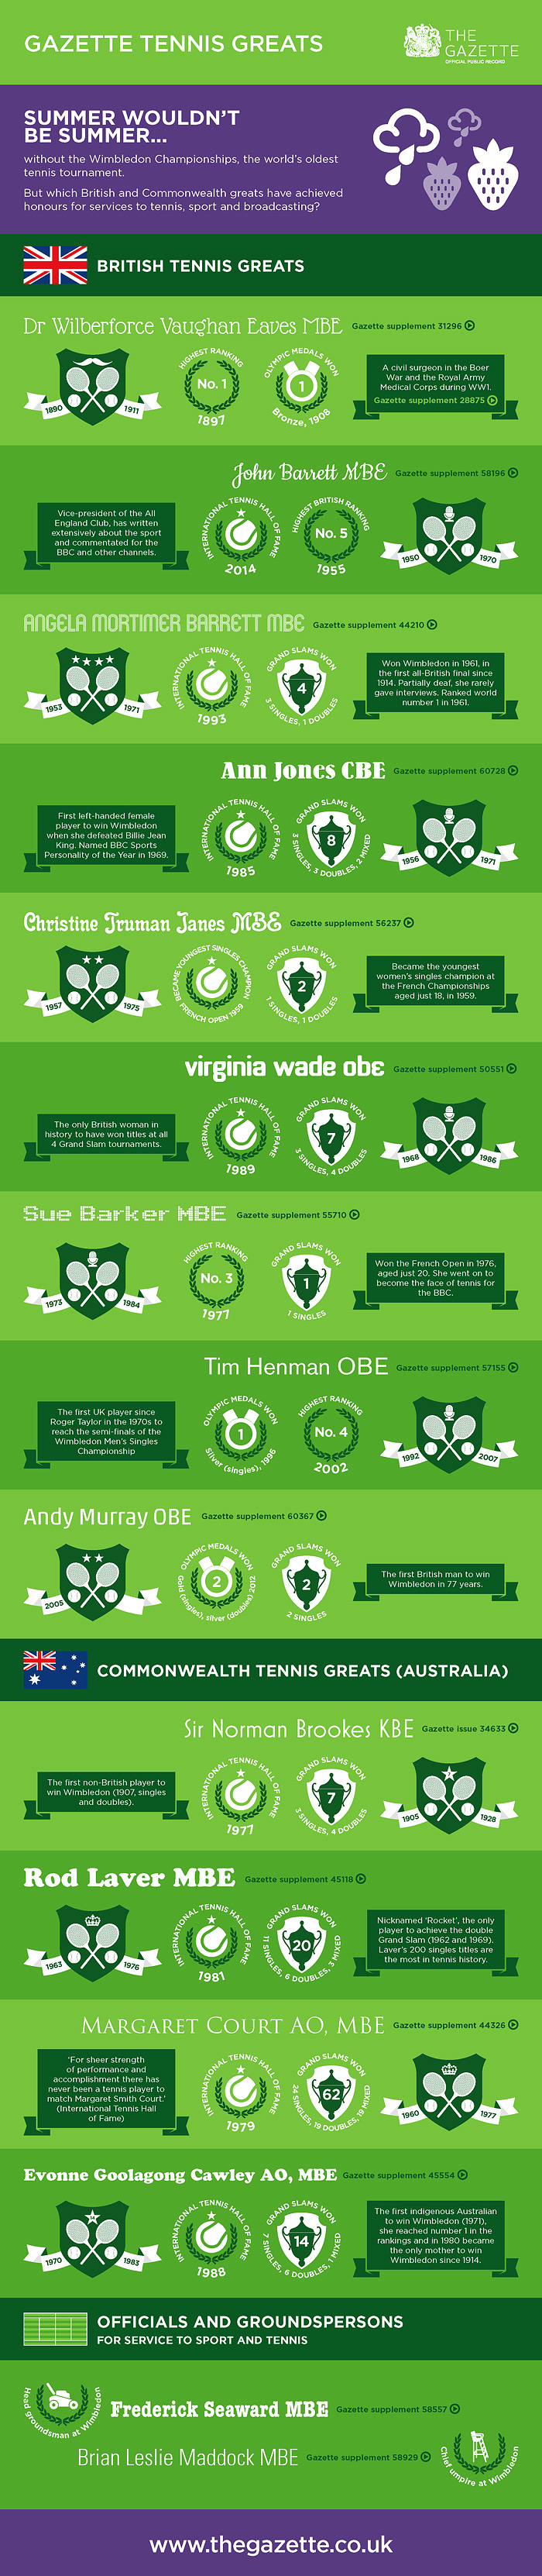 Gazette tennis greats: infographic